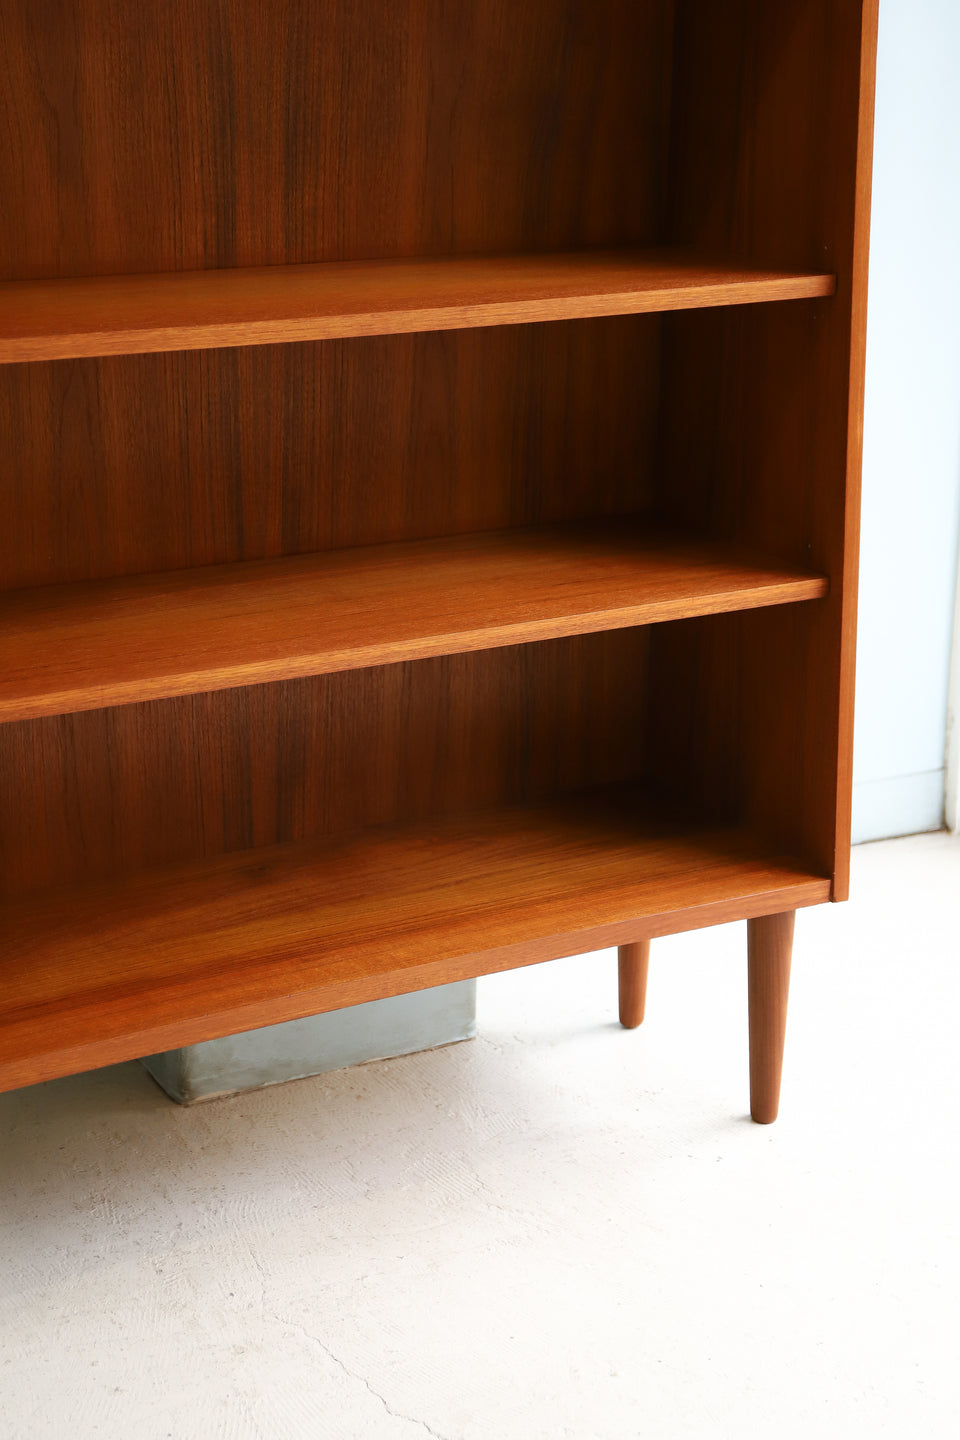 Bookcase High Shelf Danish Vintage/デンマークヴィンテージ ブックケース ハイシェルフ 本棚 チーク材 北欧家具